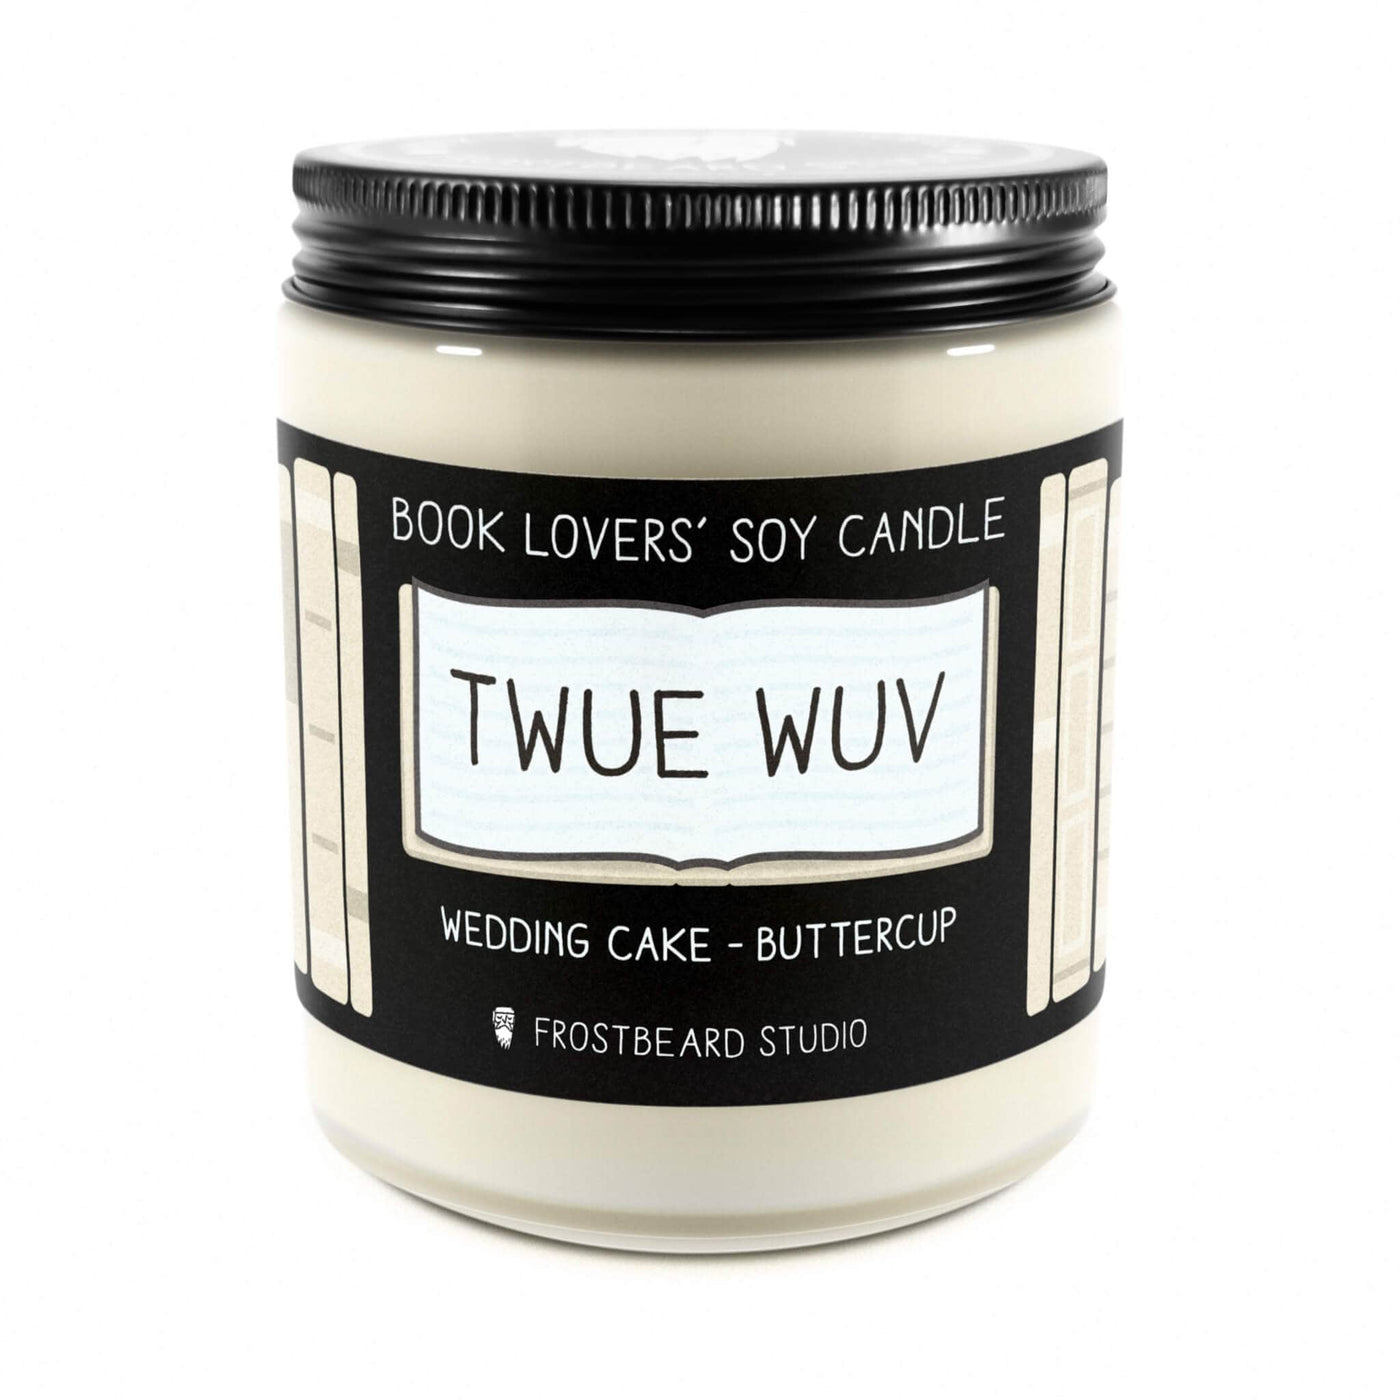 Twue Wuv - 8 oz Jar - Book Lovers' Soy Candle - Frostbeard Studio